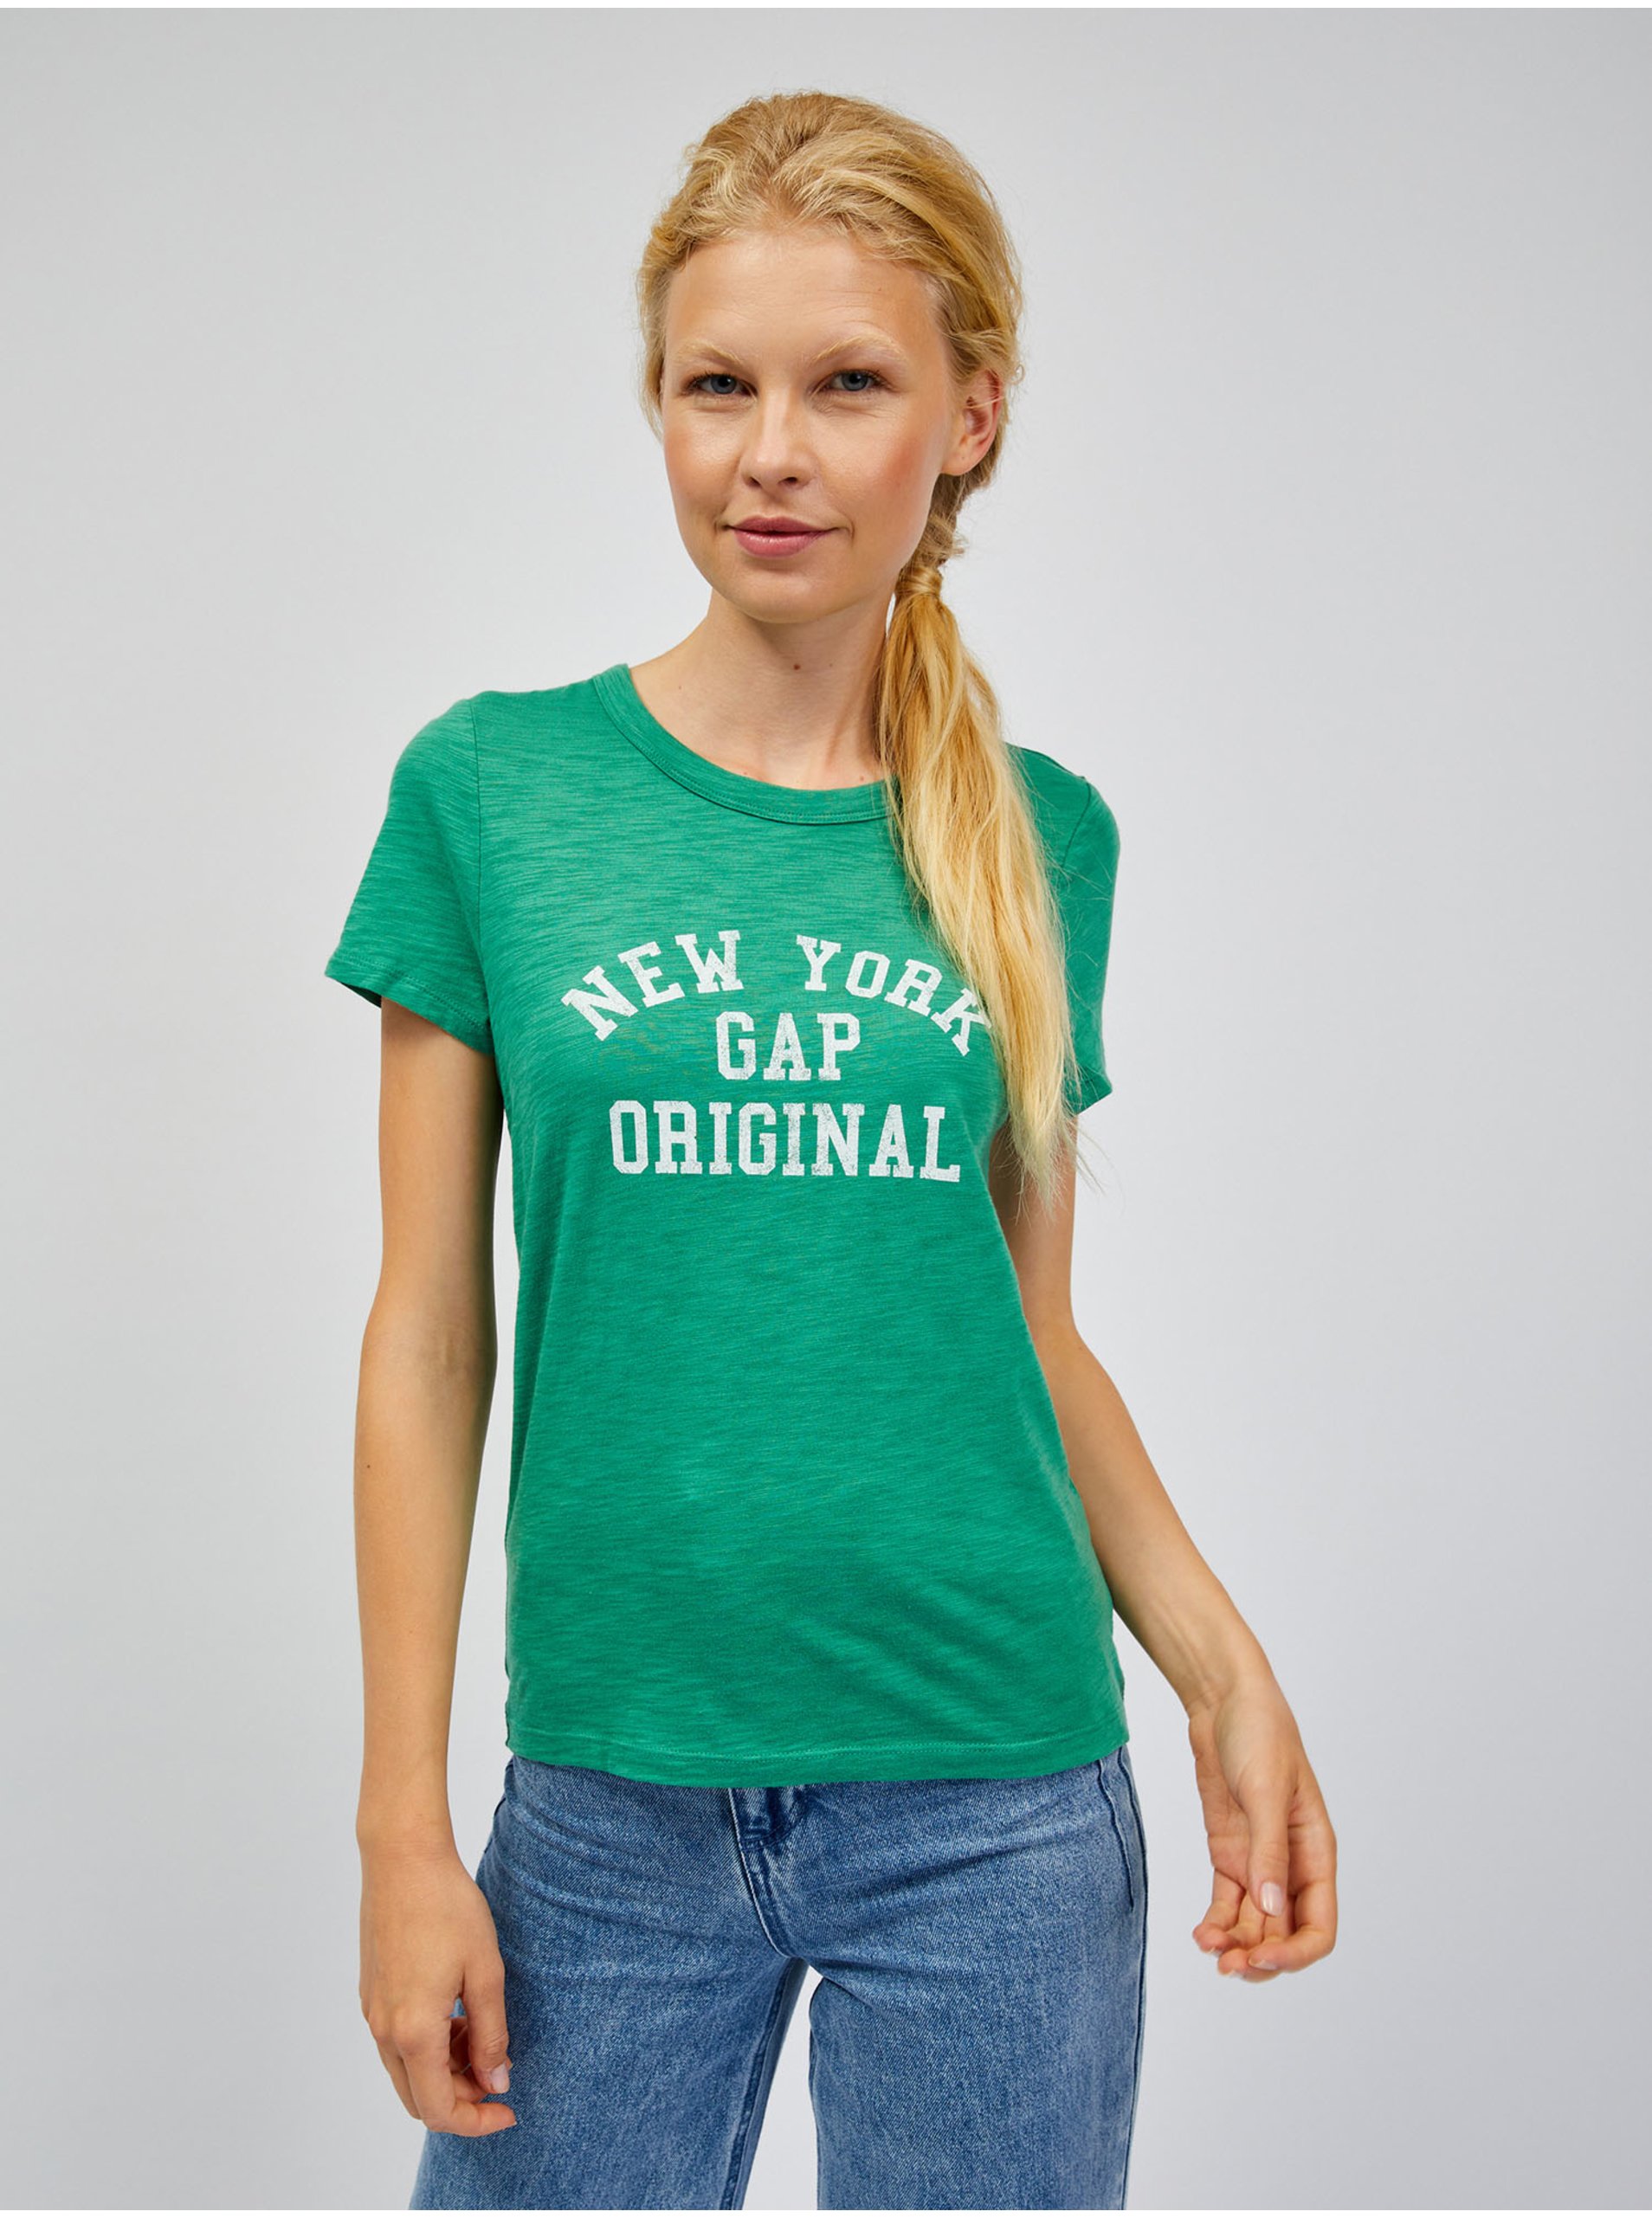 Lacno Zelené dámske tričko GAP original New York